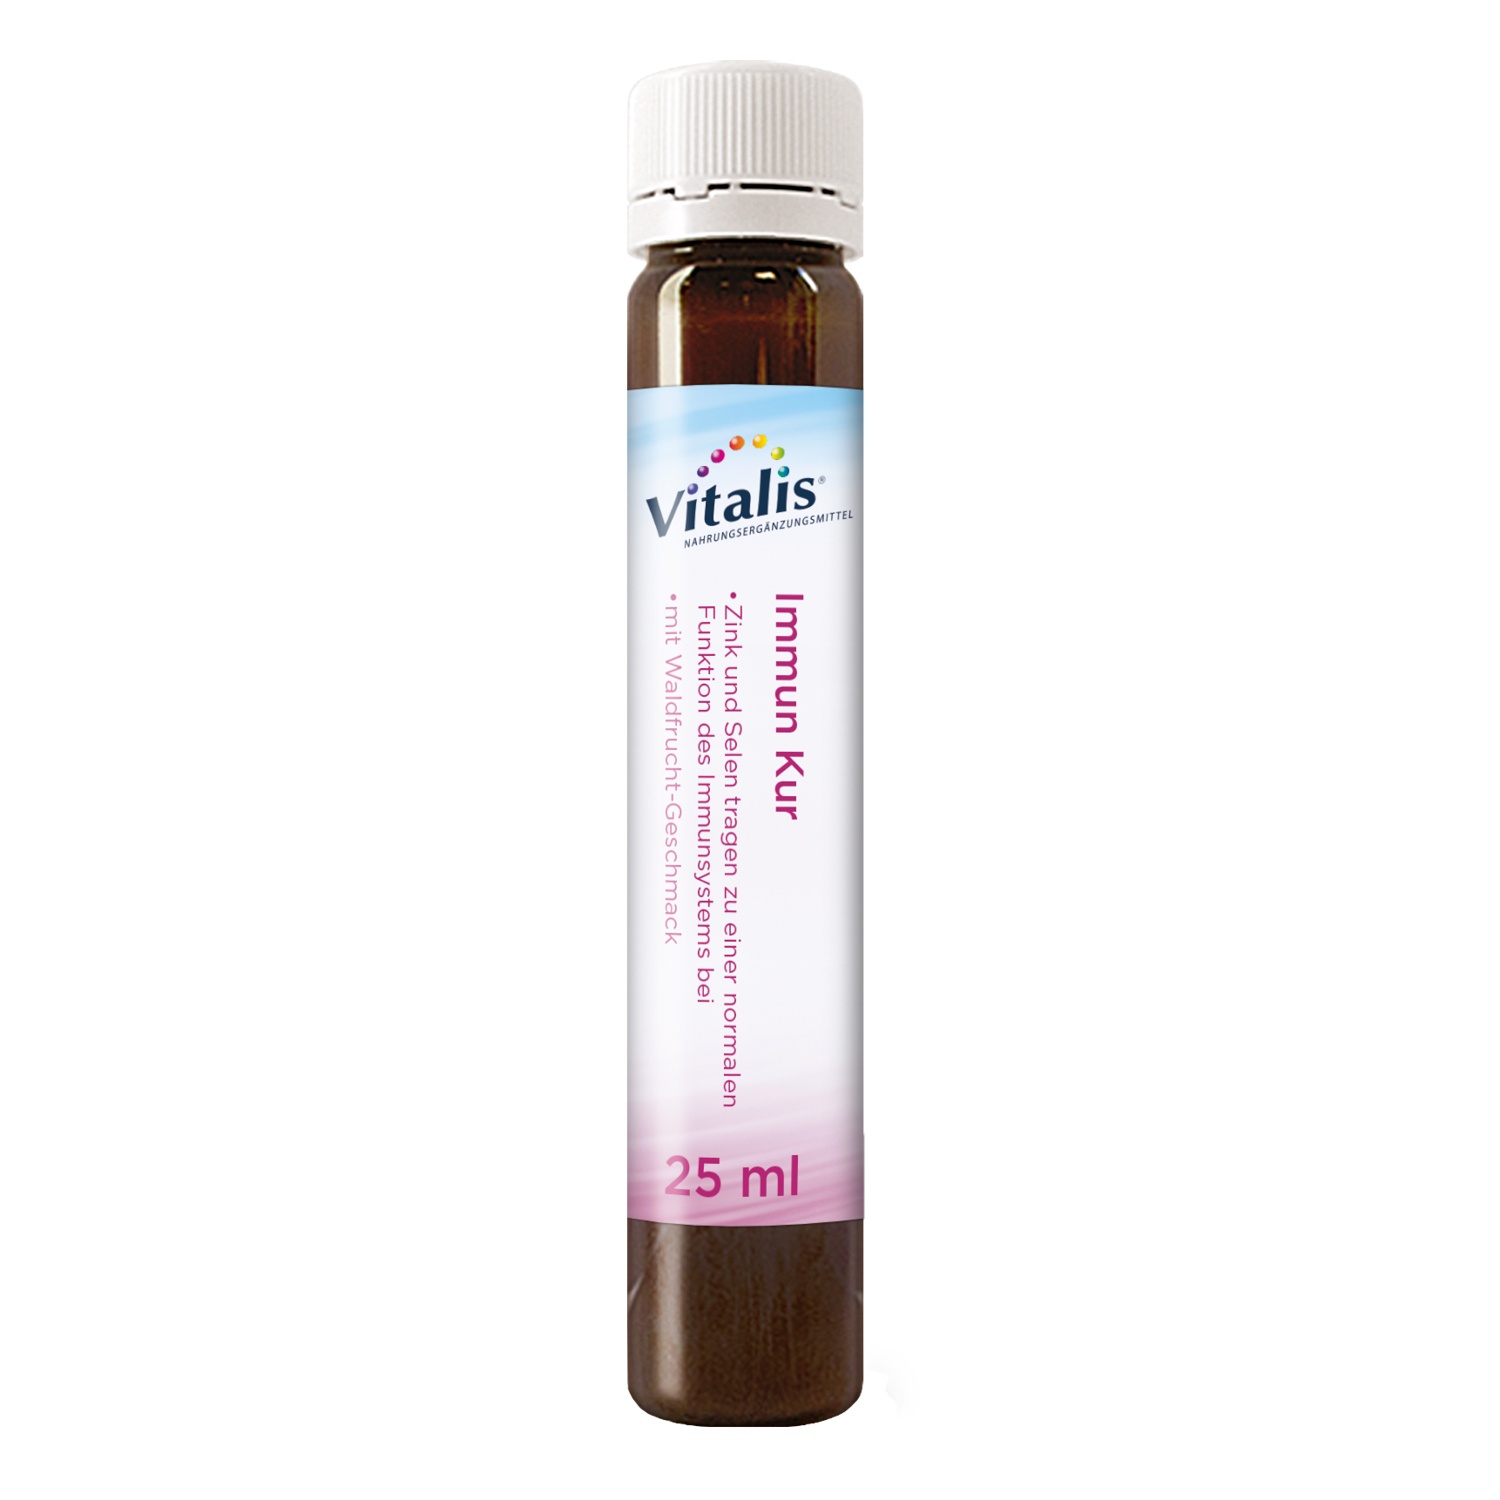 Vitalis® Immun Kur 175 ml